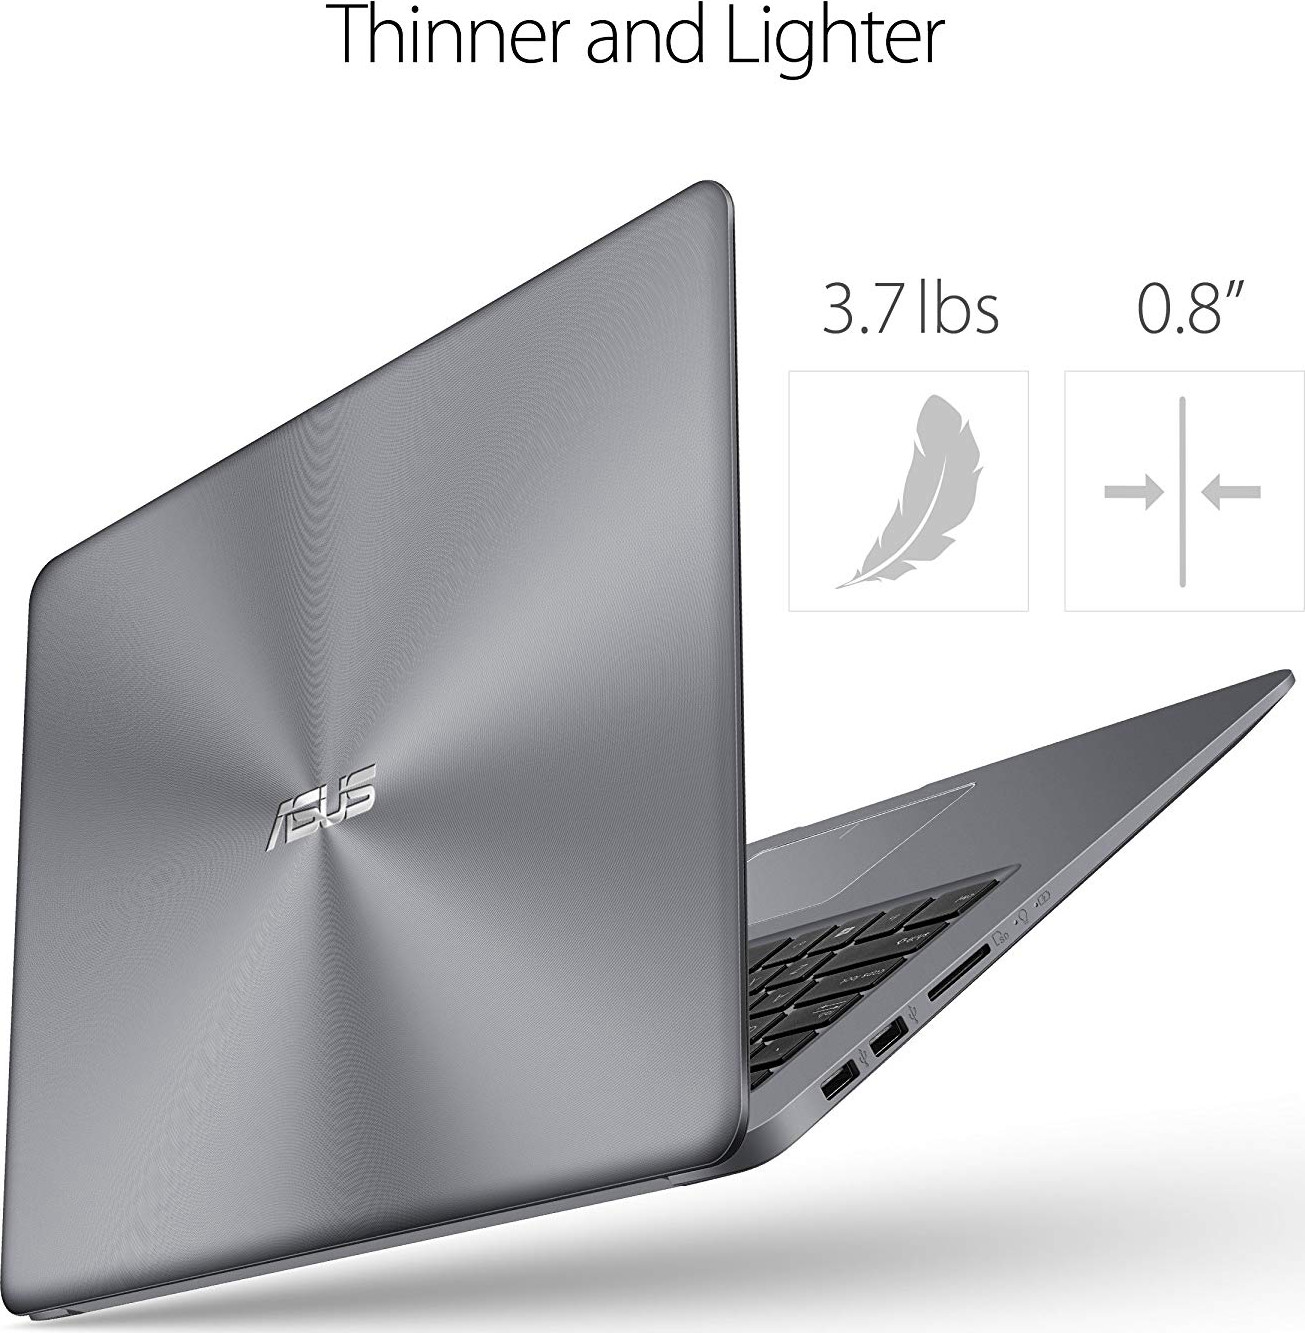 ASUS VivoBook F510UA Thin and Lightweight 15.6” FHD WideView NanoEdge Laptop, Intel Core i5-7200U 2.5GHz, 8GB DDR4 RAM, 1TB HDD, USB Type-C, Fingerprint Reader, Windows 10 – F510UA-AH50